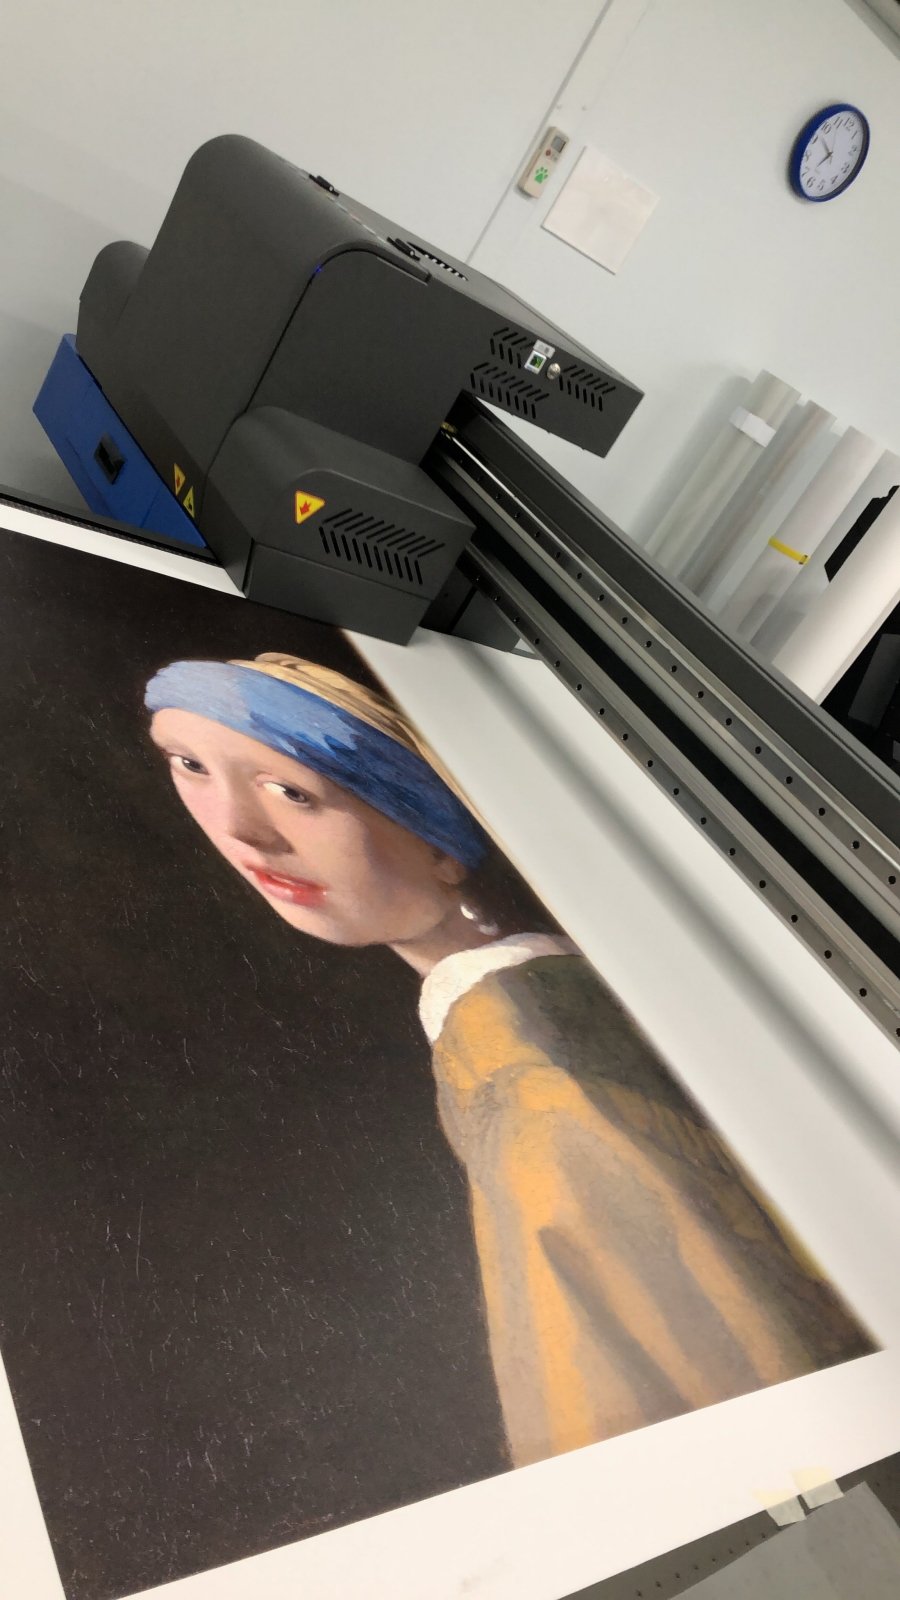 UV Print Service on materials